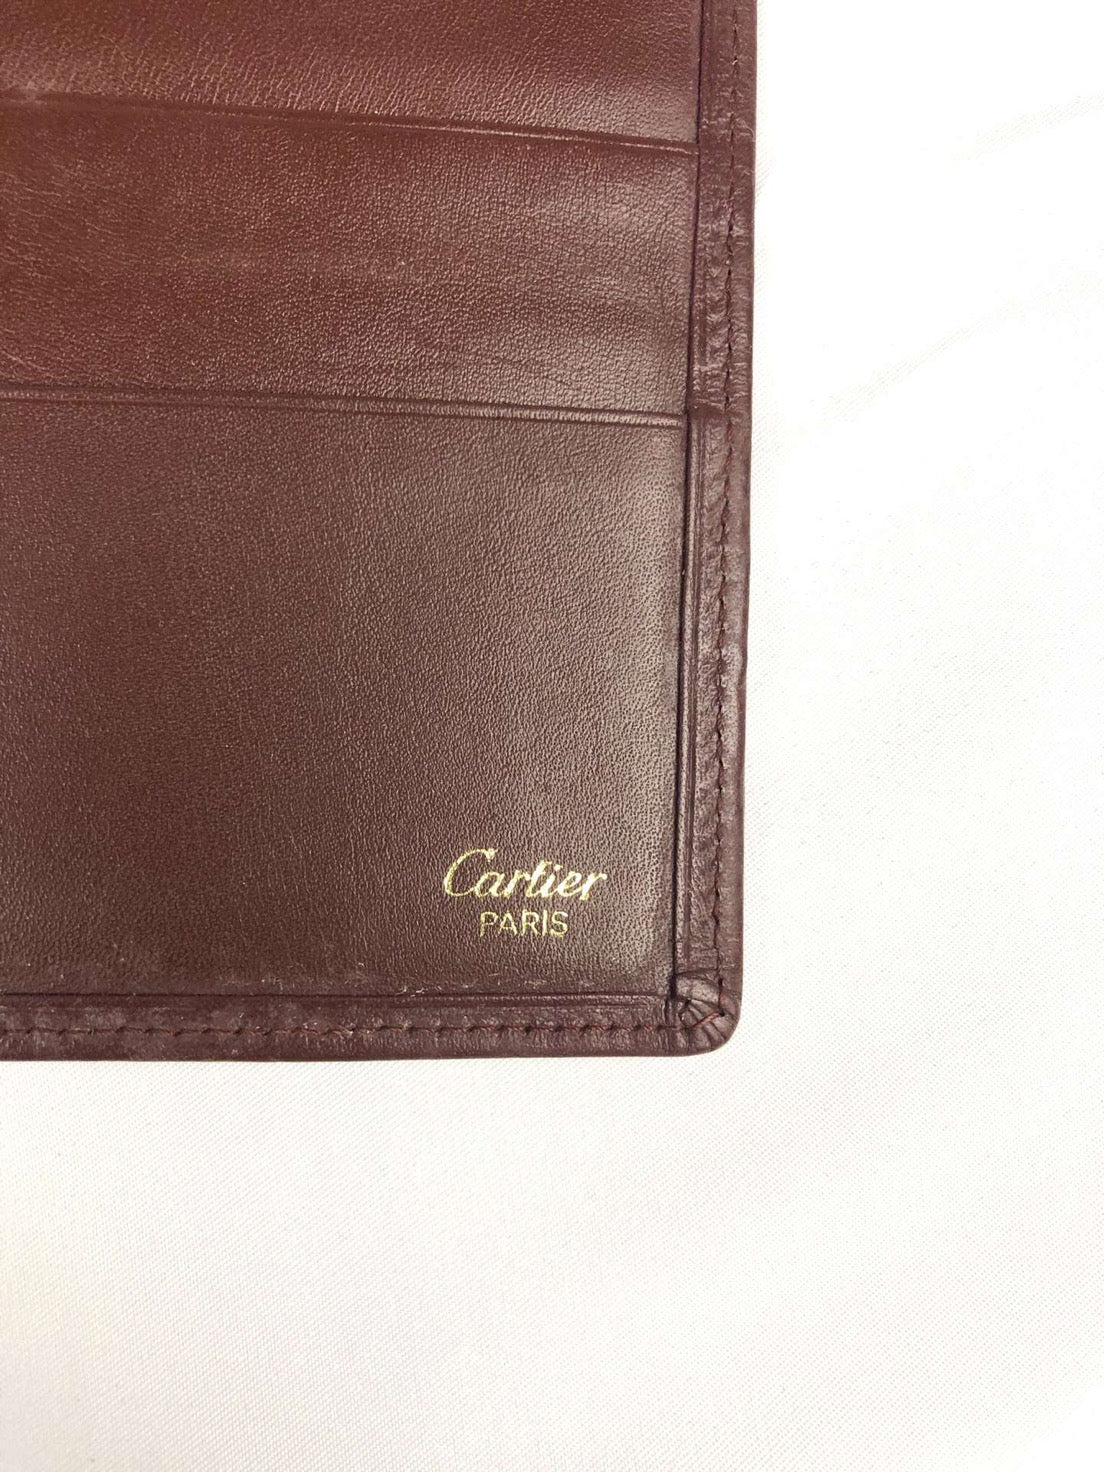 Cartier Purse